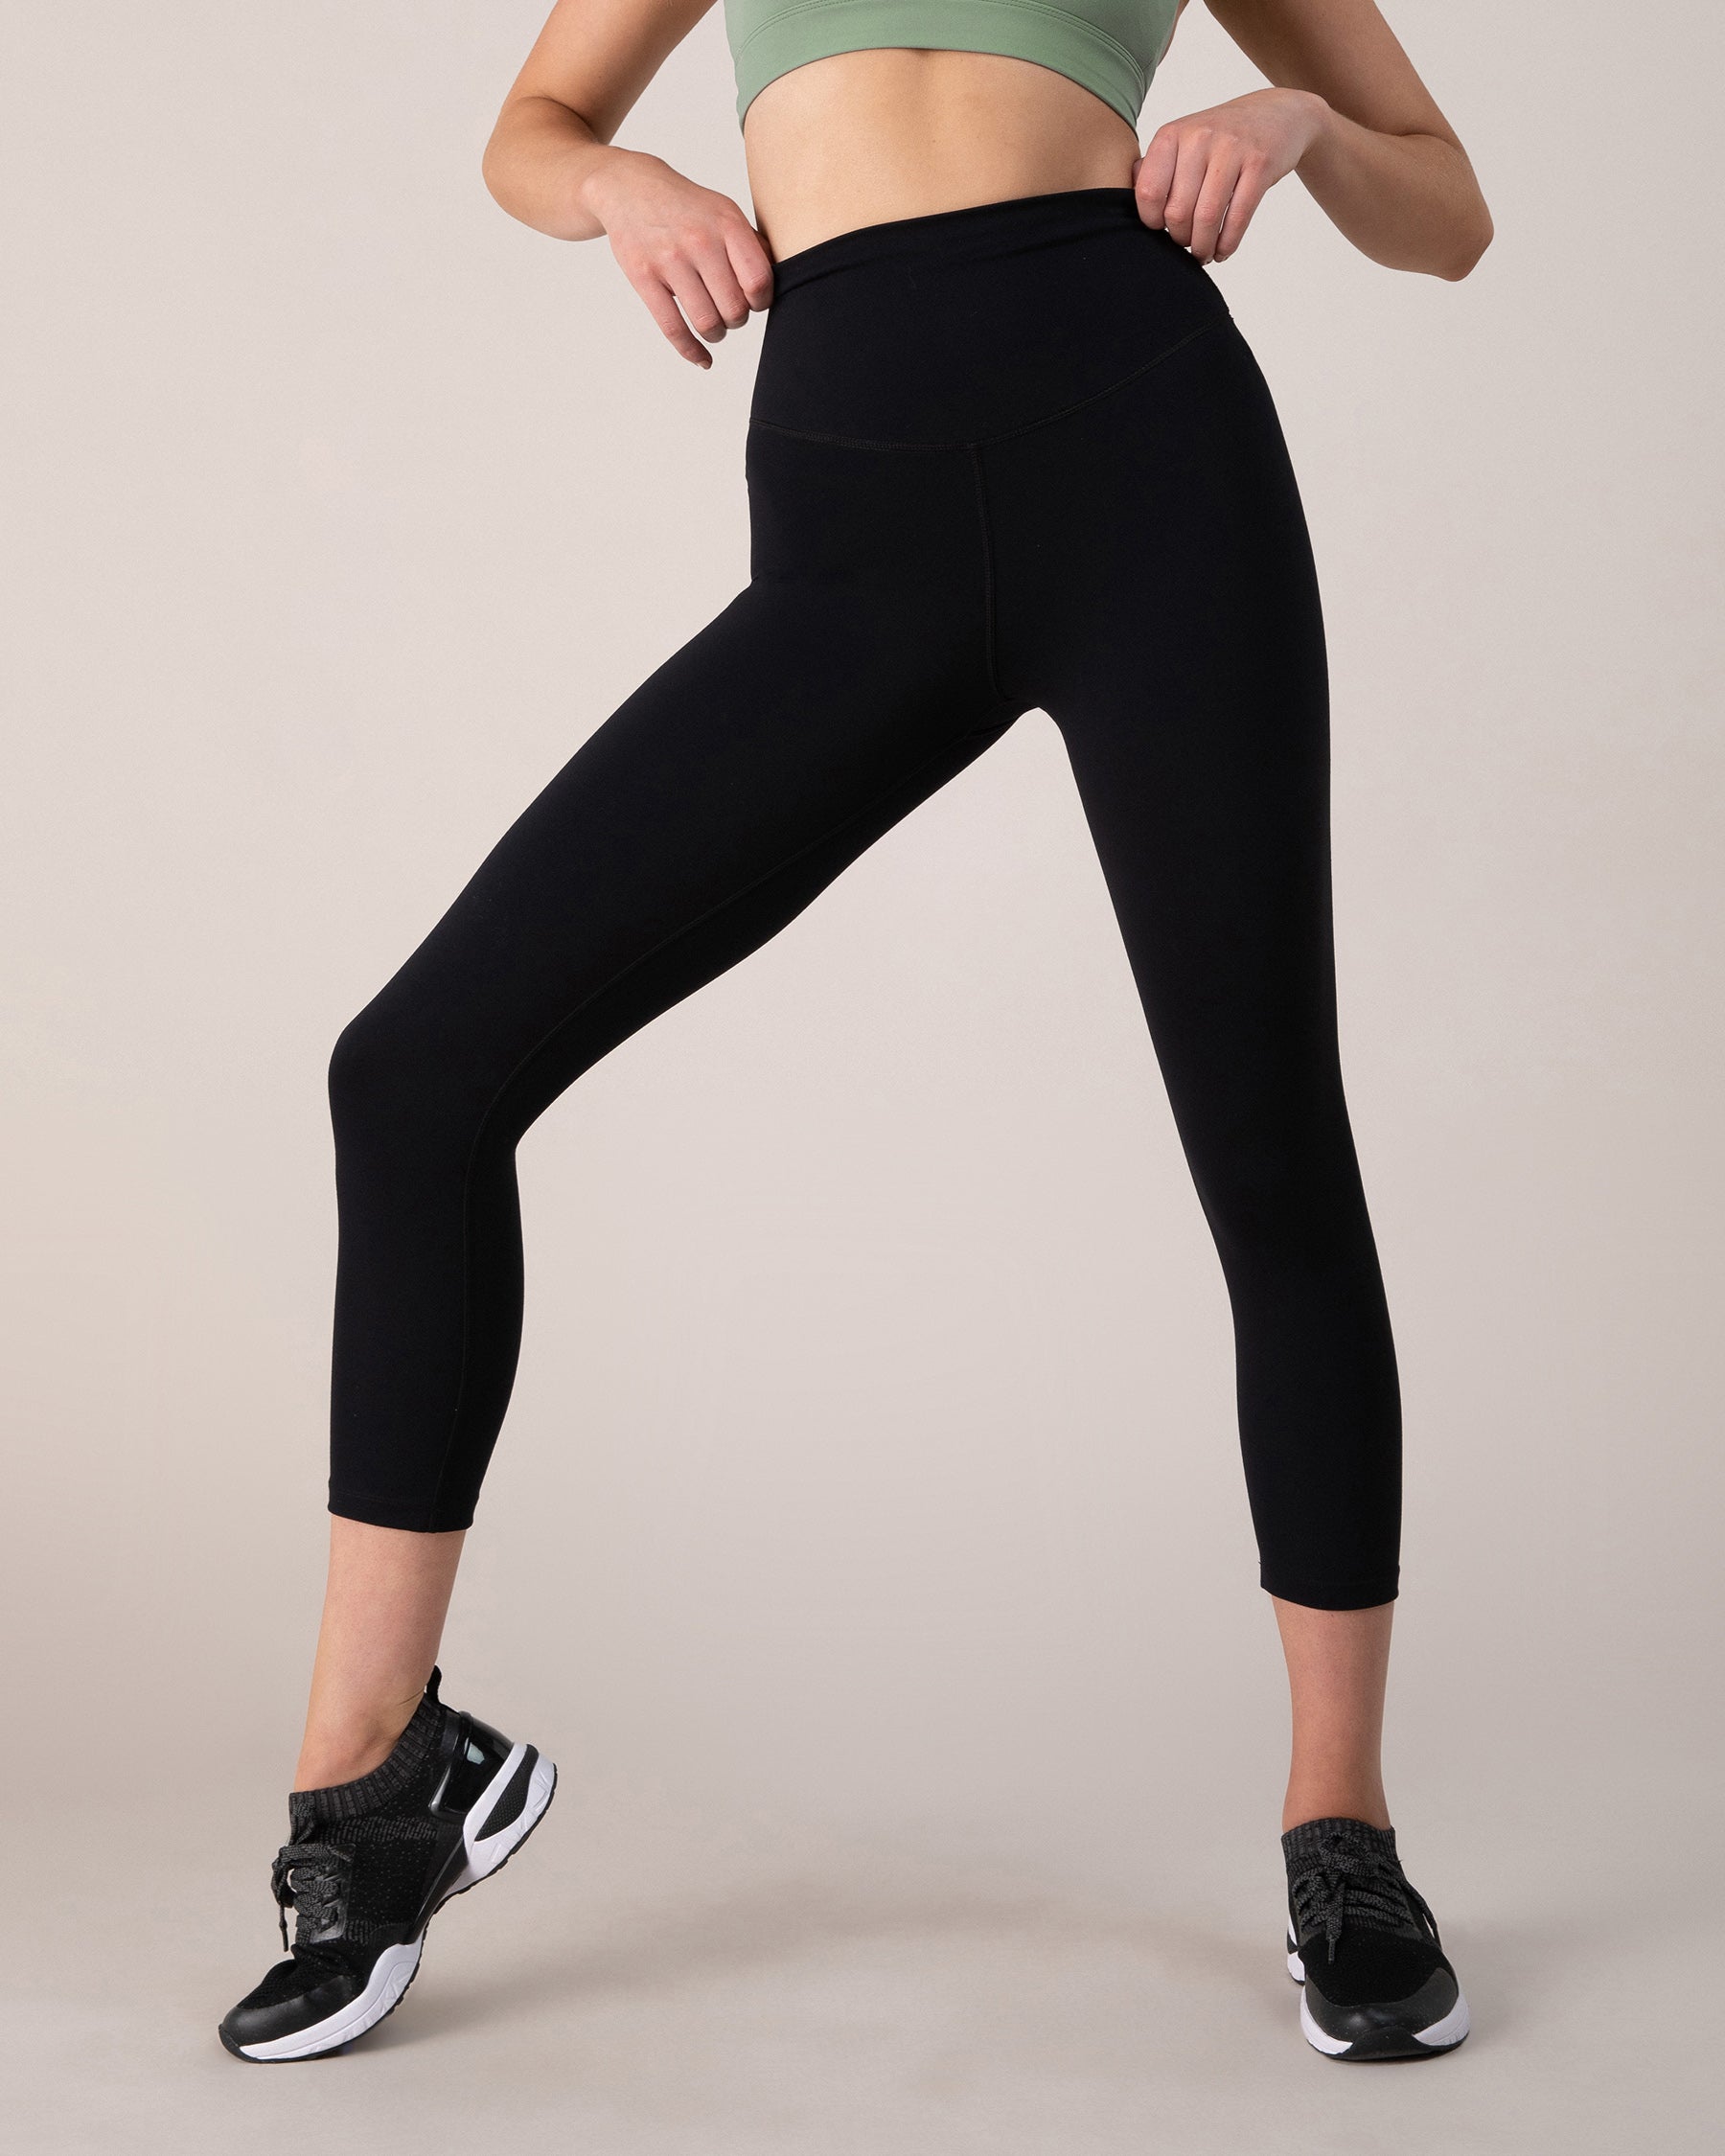 Mens Long John Mesh Sheer Yoga Pants Fitness Trousers Smooth Leggings  Underwear | eBay